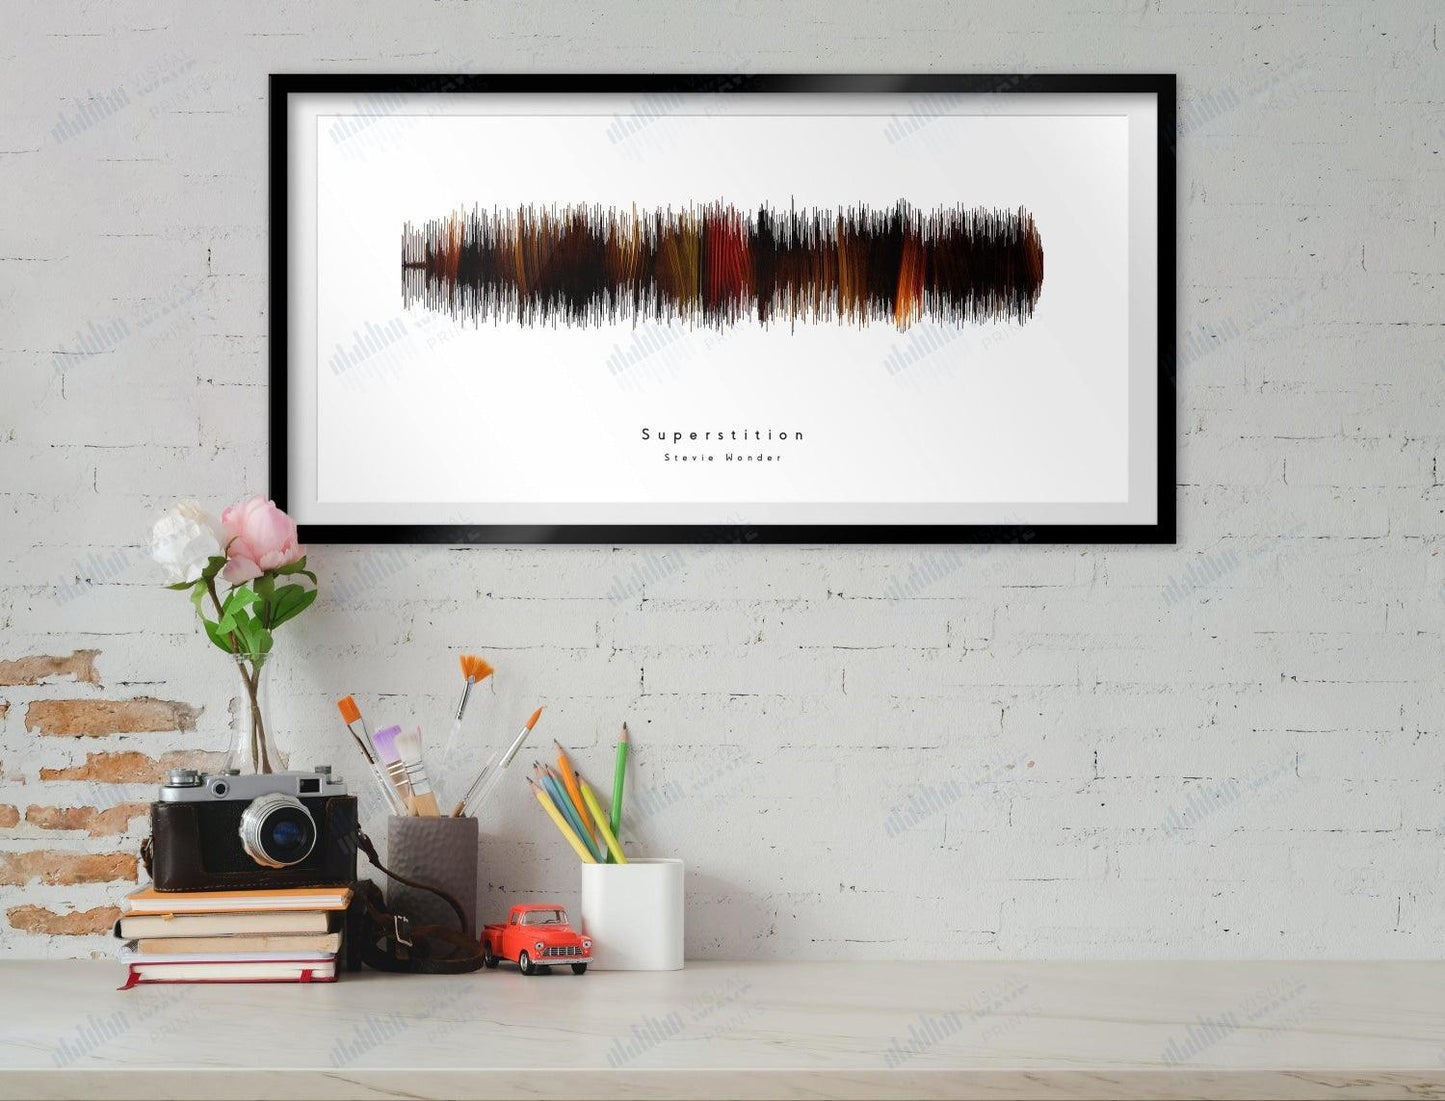 Superstition by Stevie Wonder - Visual Wave Prints